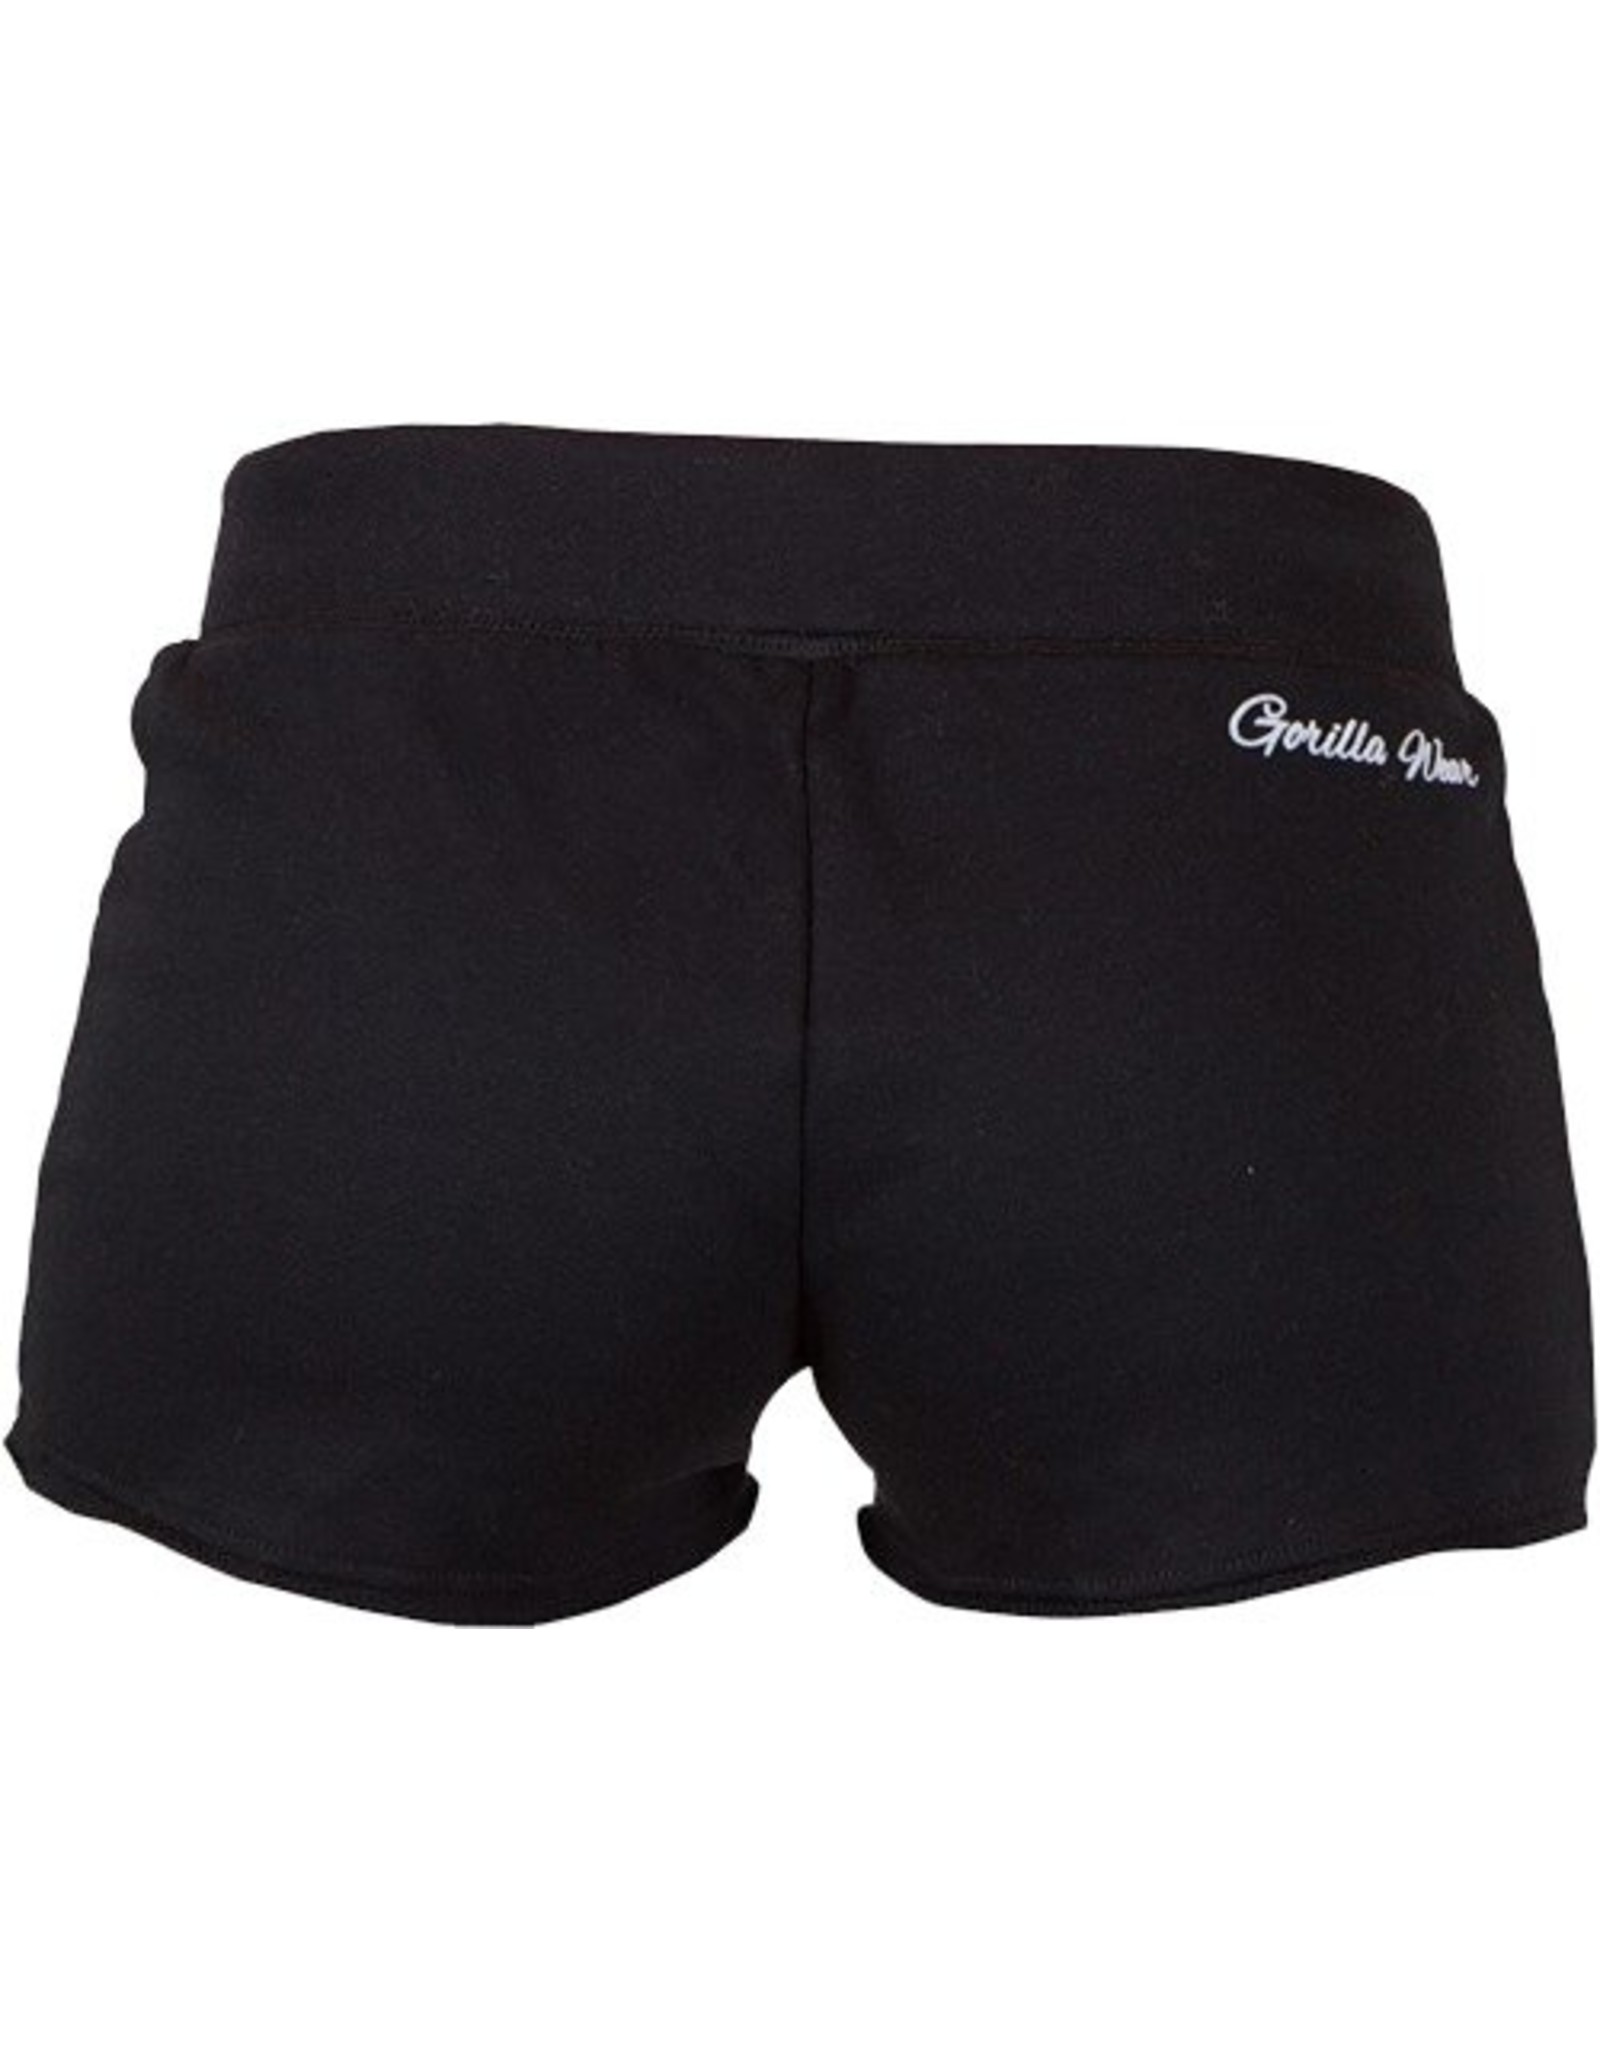 Gorilla Wear New Jersey Shorts - Black